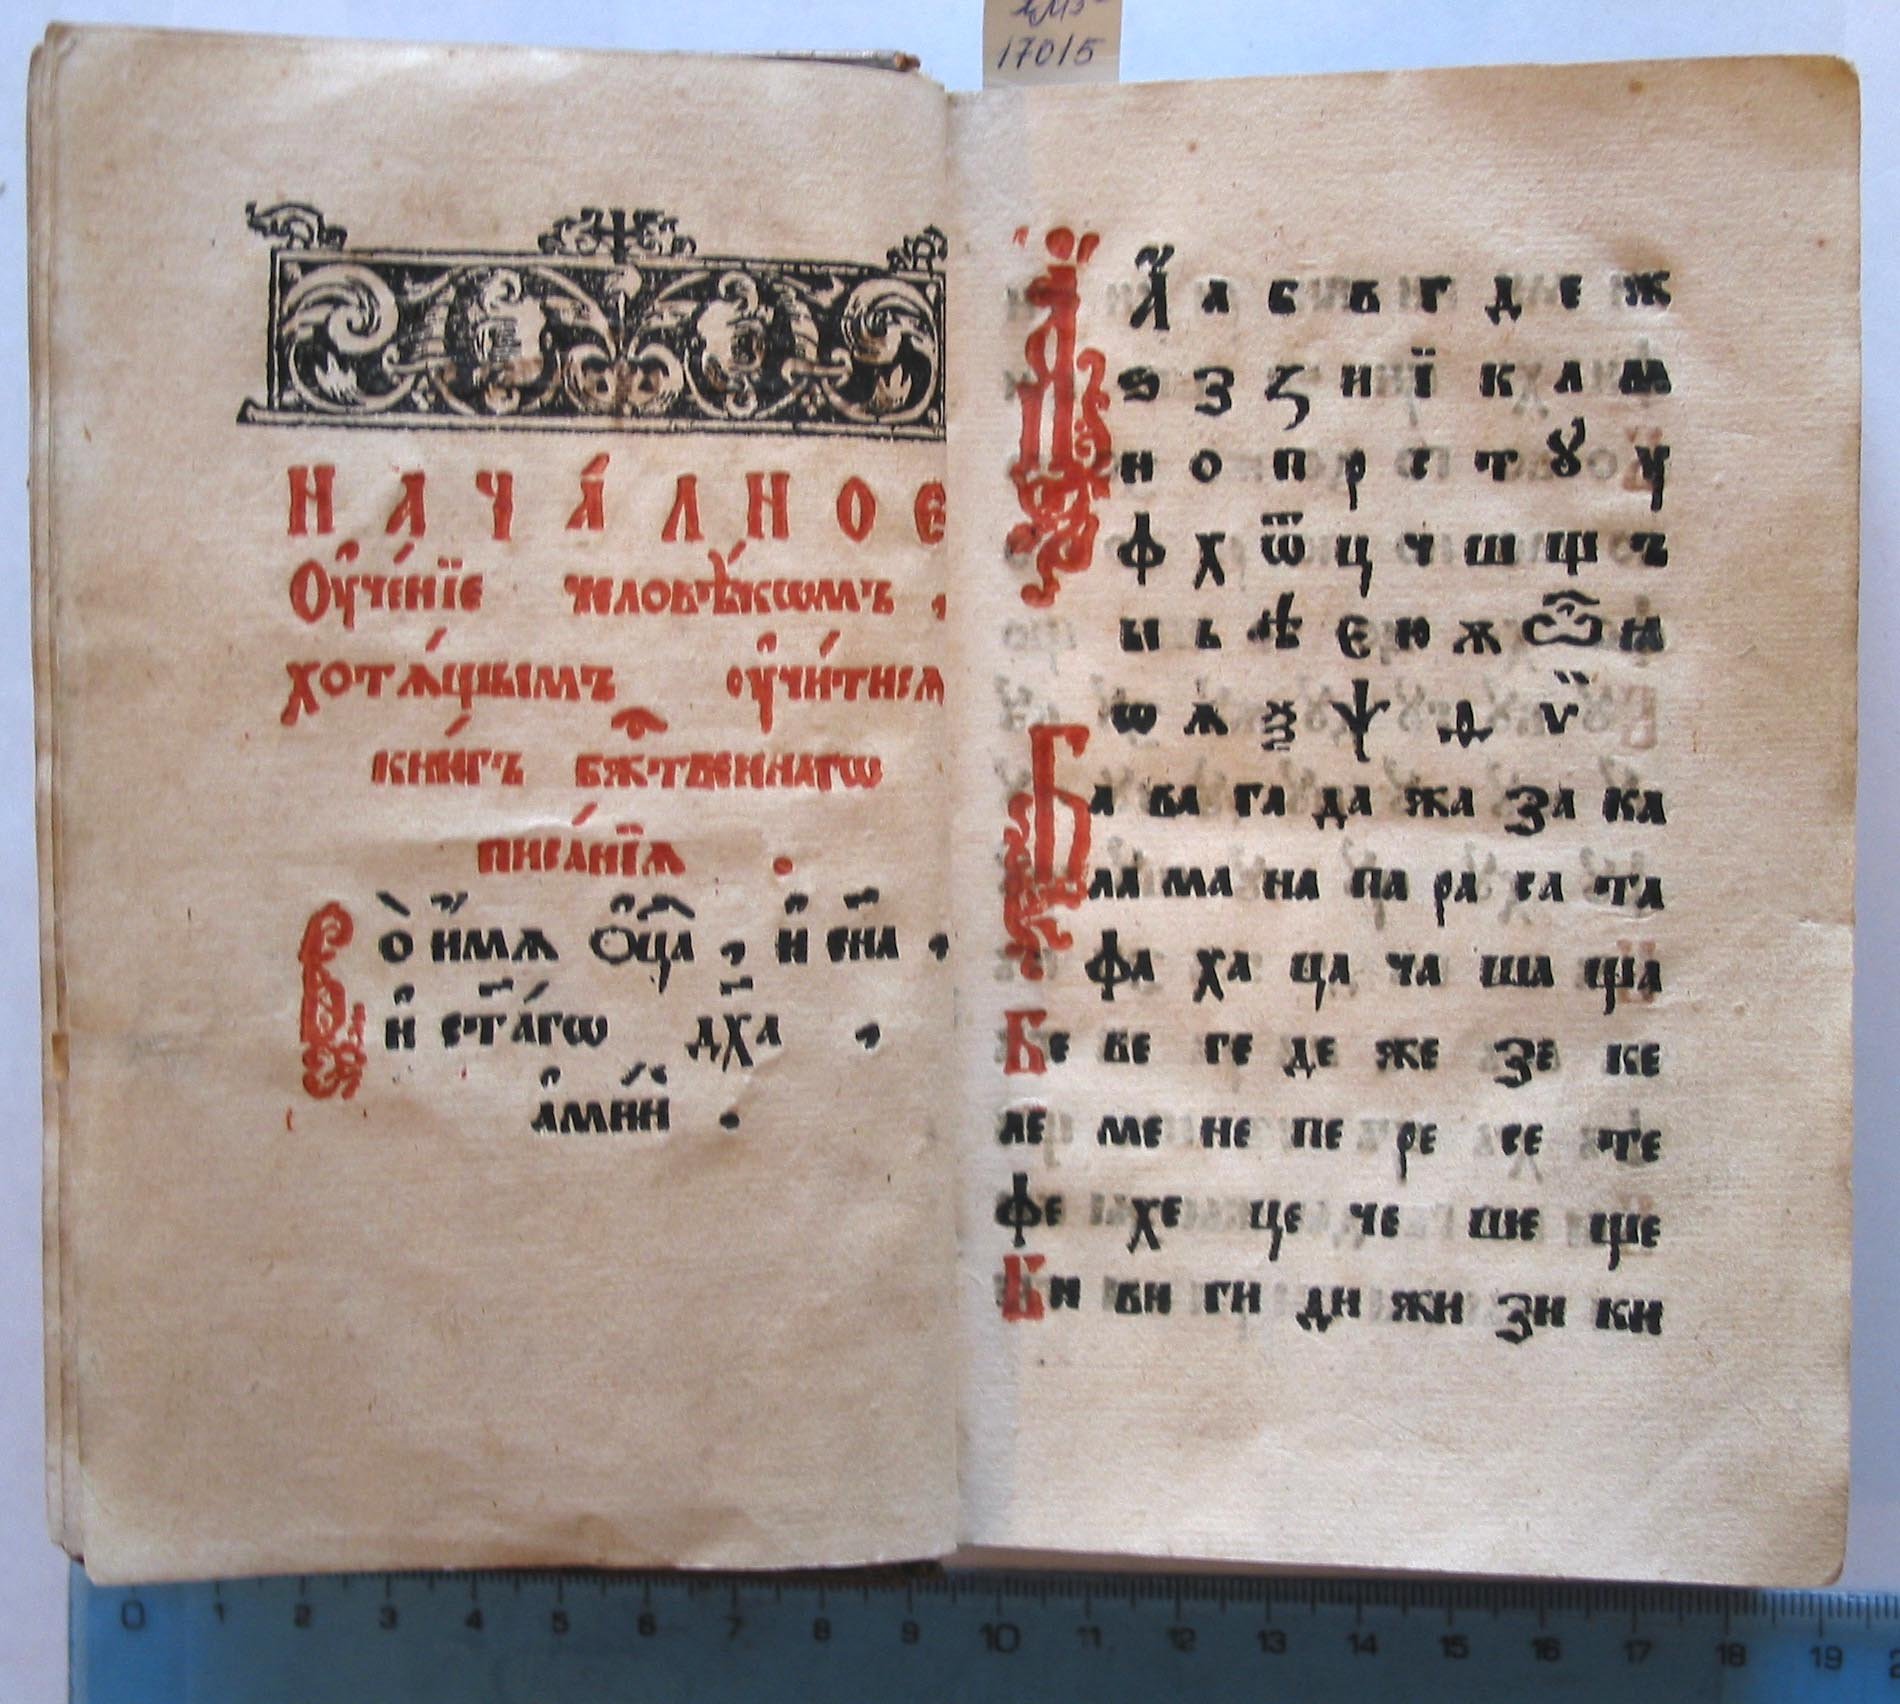 Азбука слов книги. Букварь Ивана Федорова 1574.